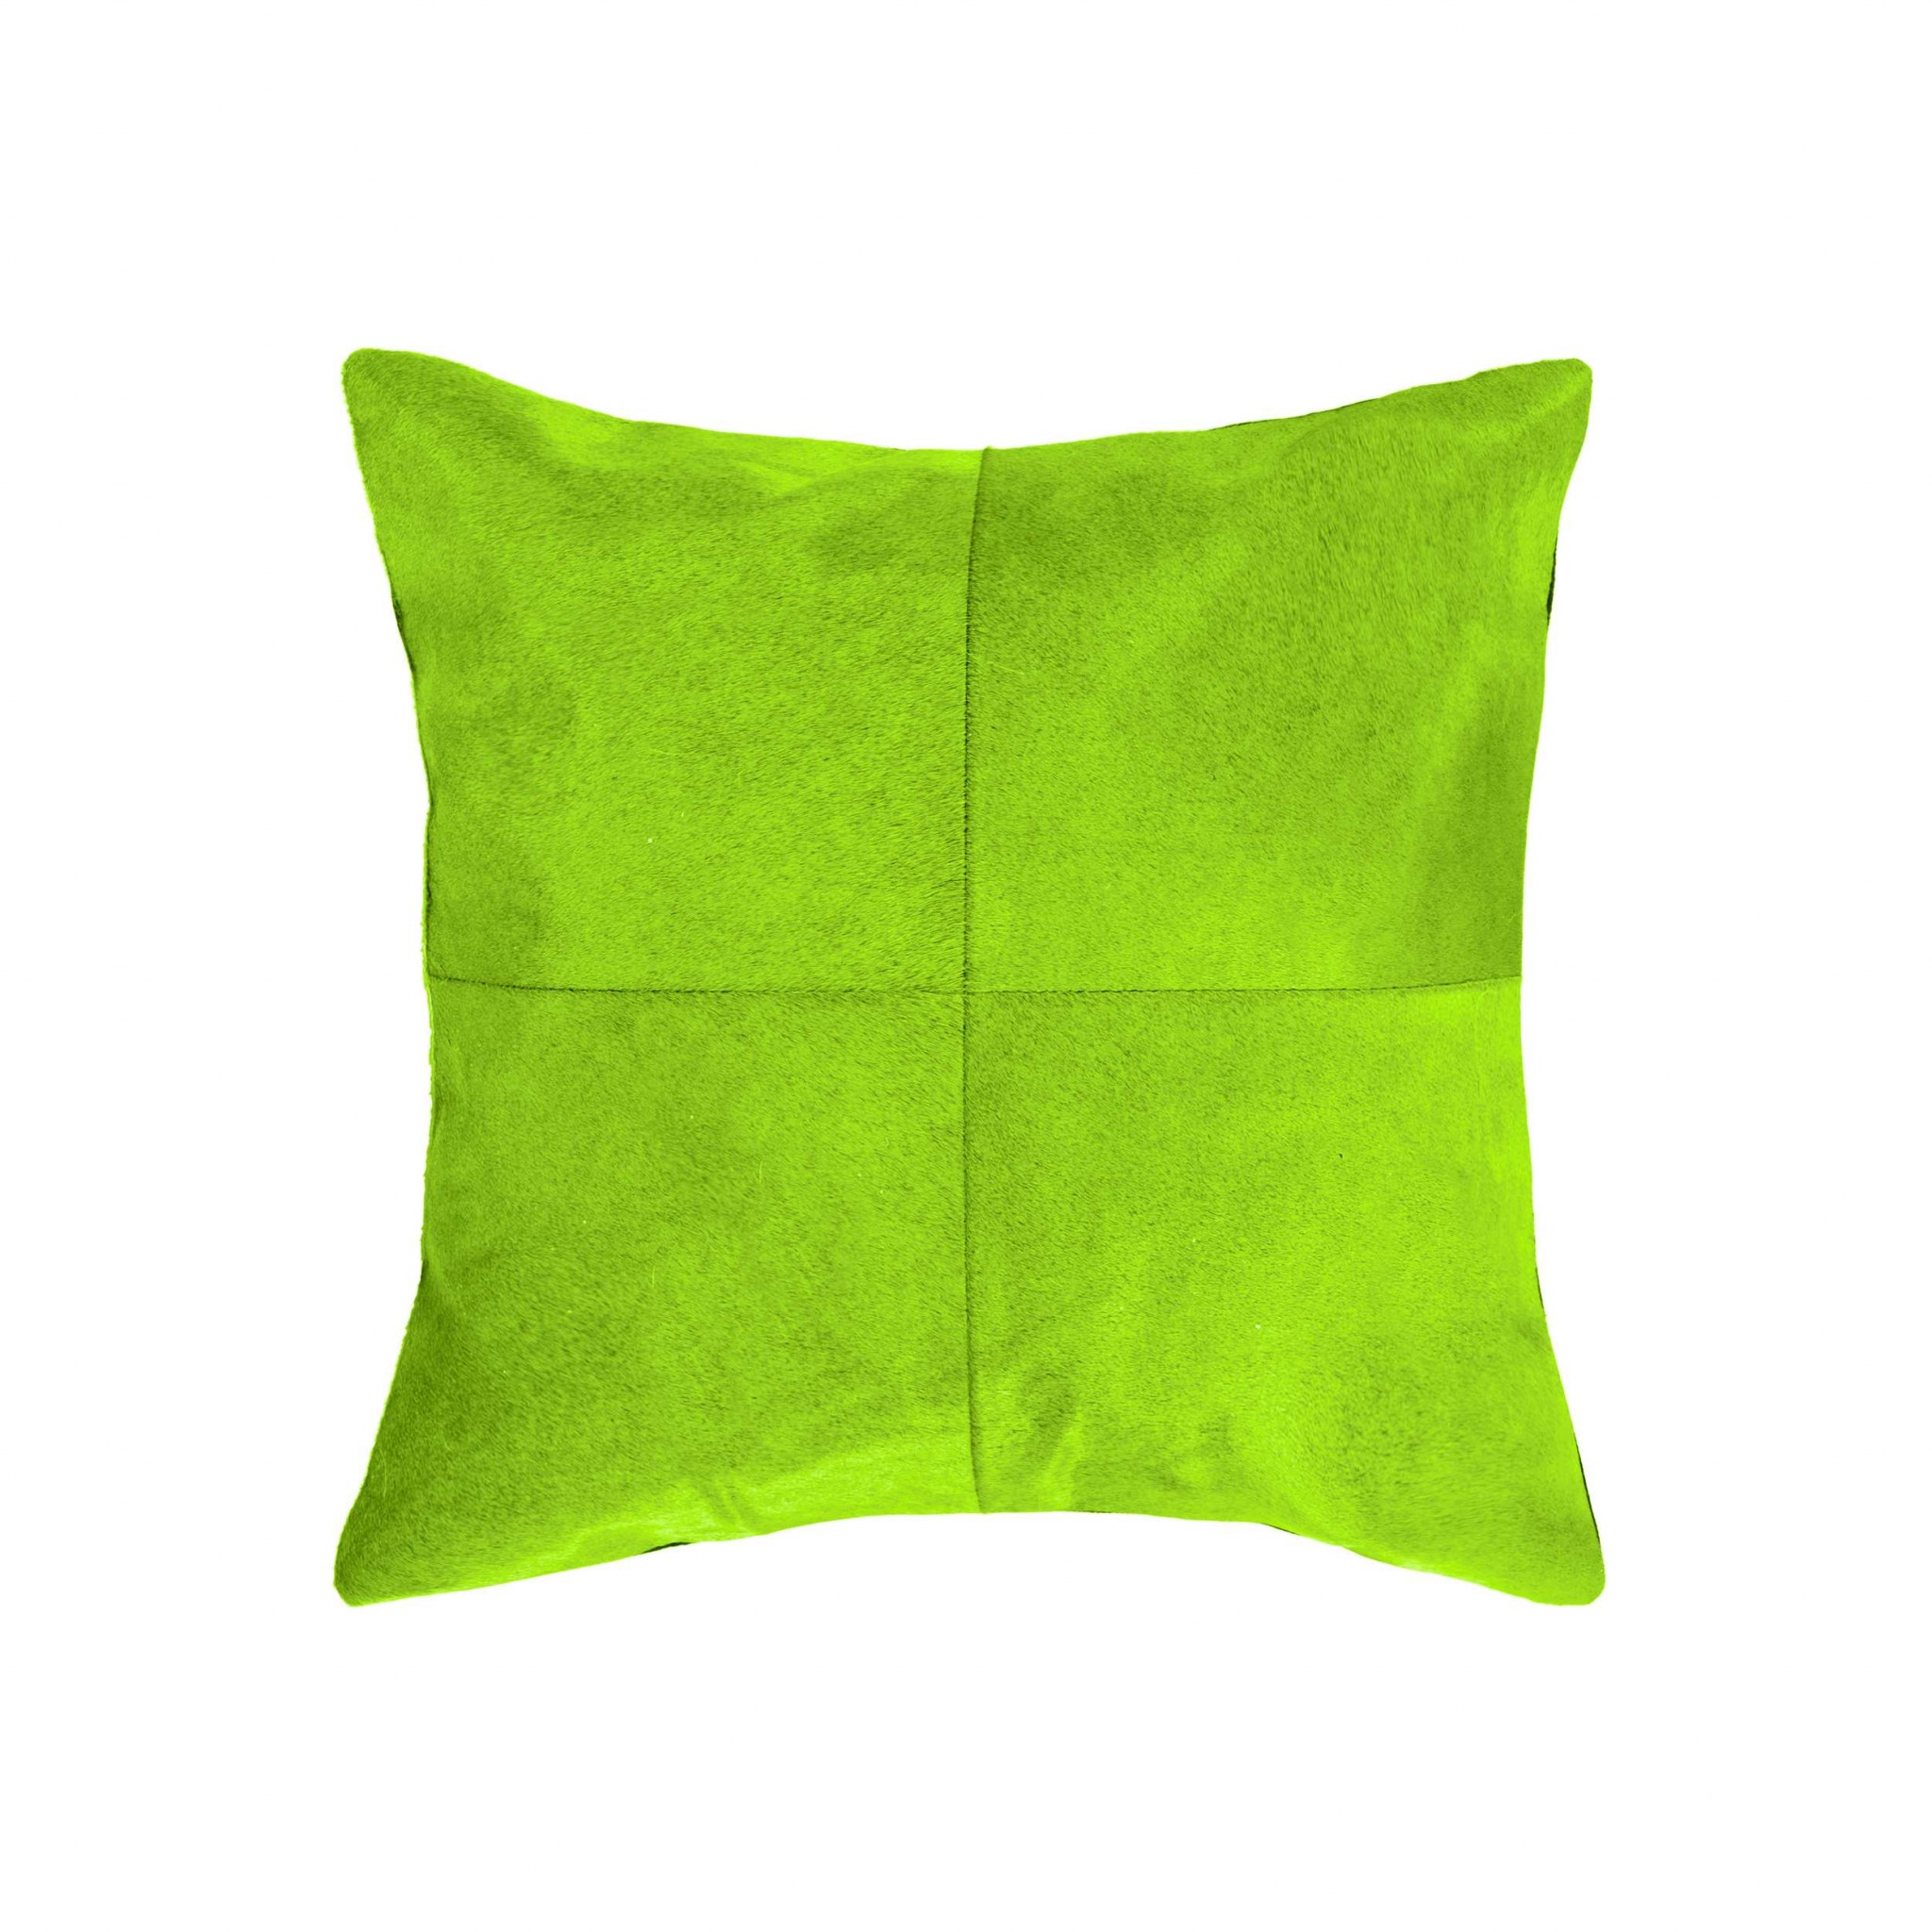 18" x 18" x 5" Lime Quattro - Pillow